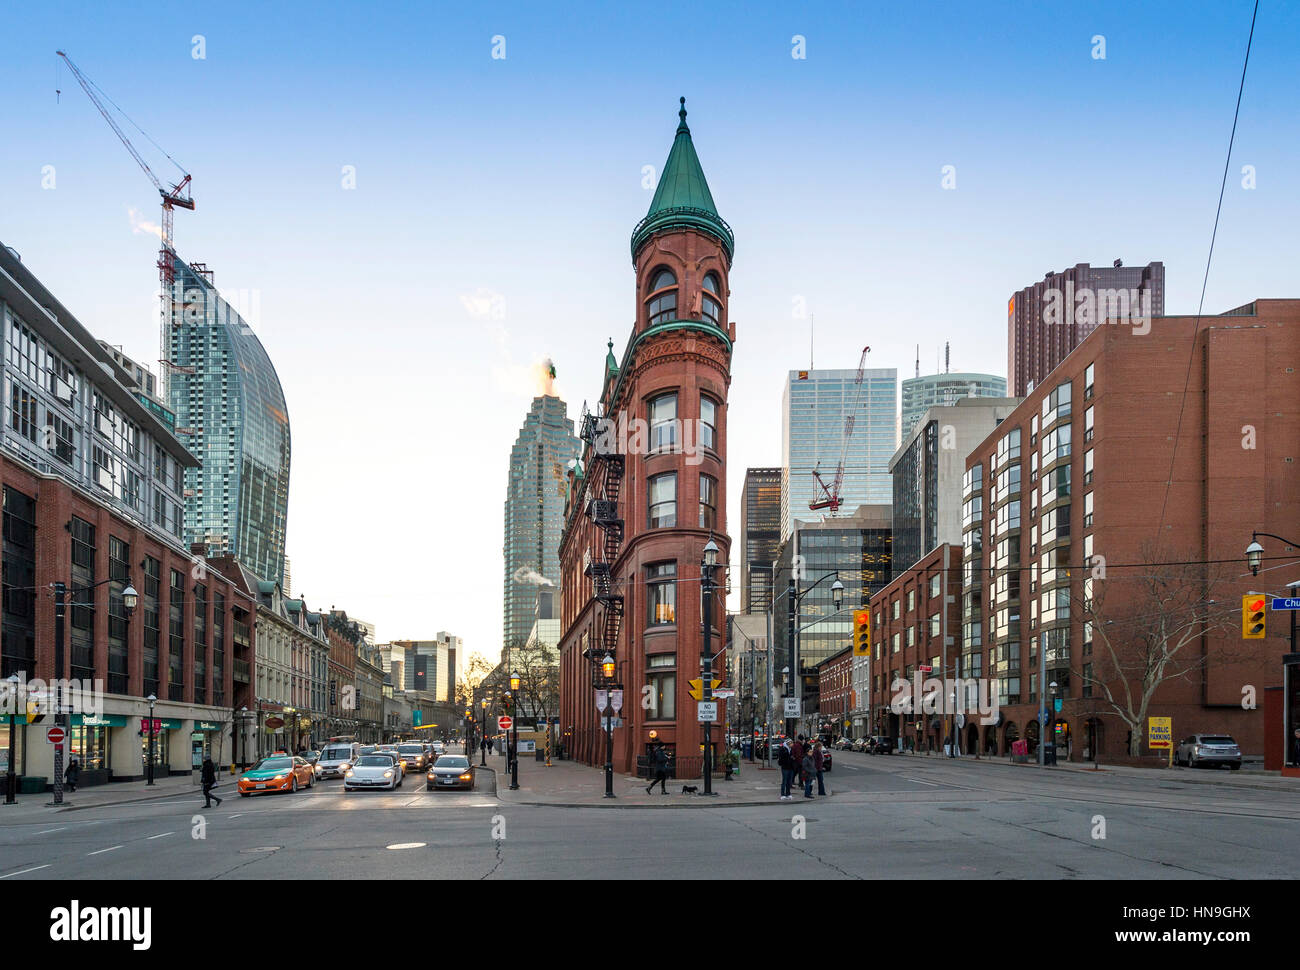 Flat iron building in downtown Toronto Stock Photo